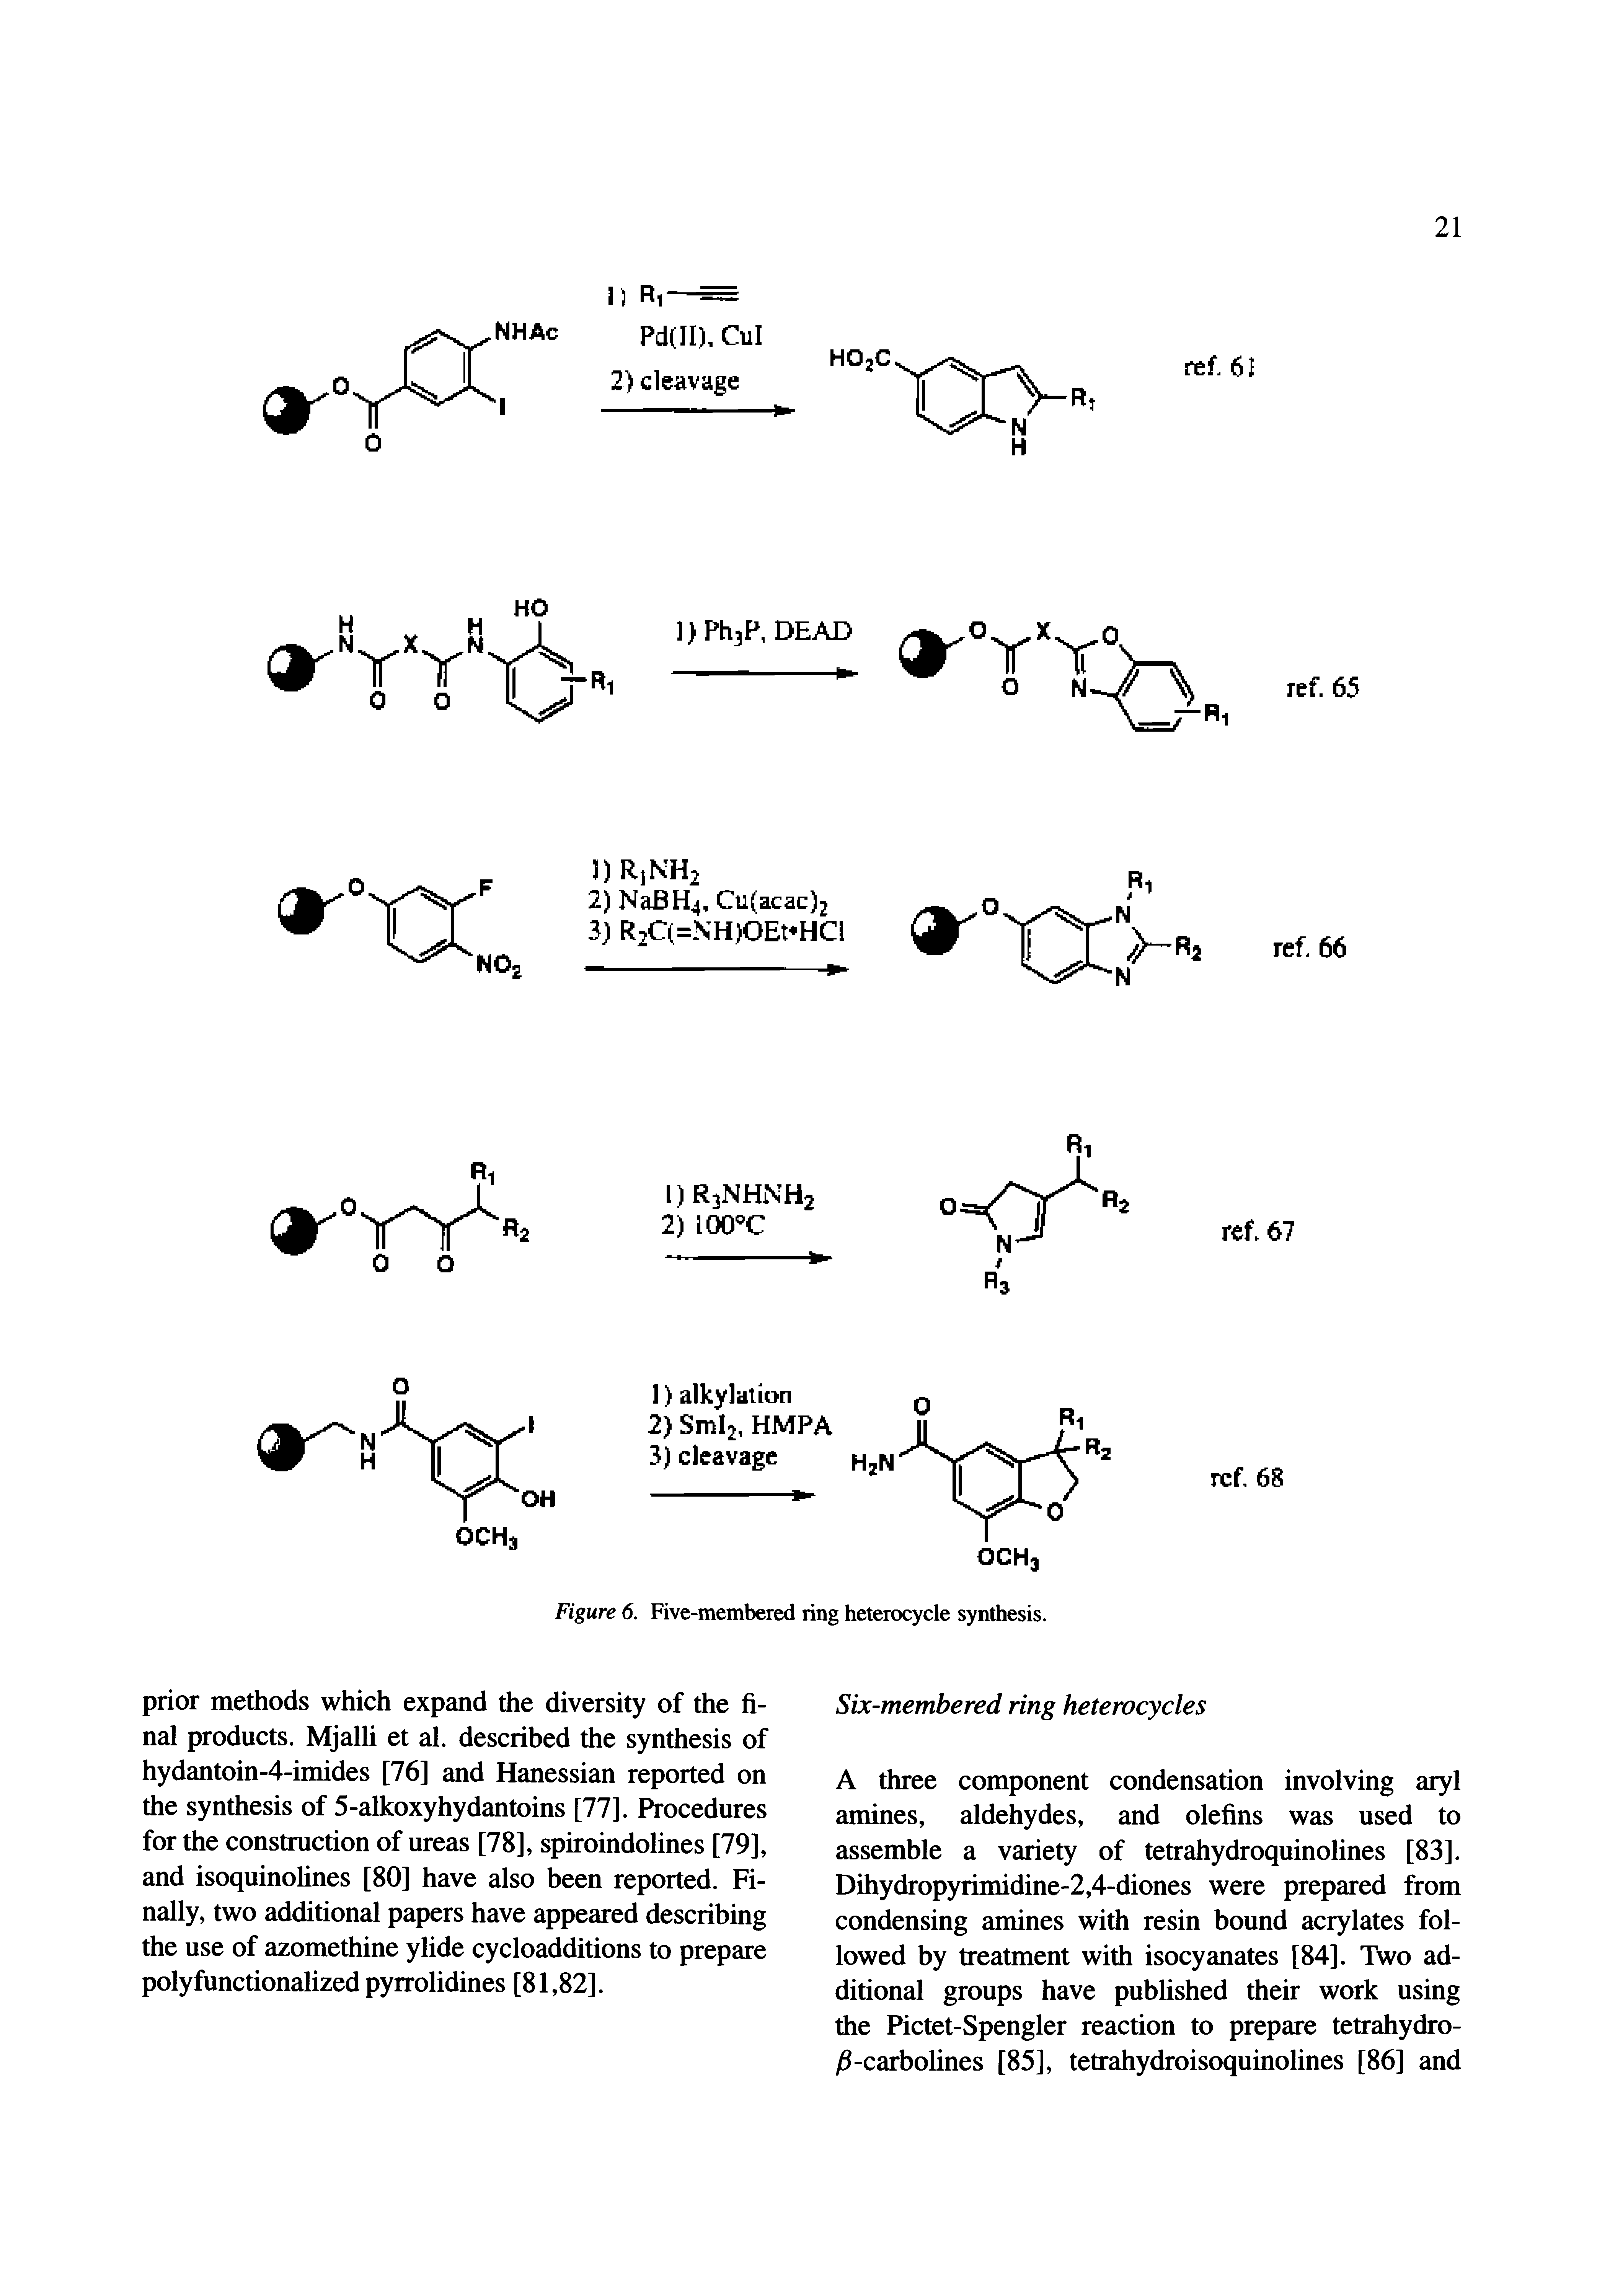 Figure 6. Five-membered ring heterocycle synthesis.